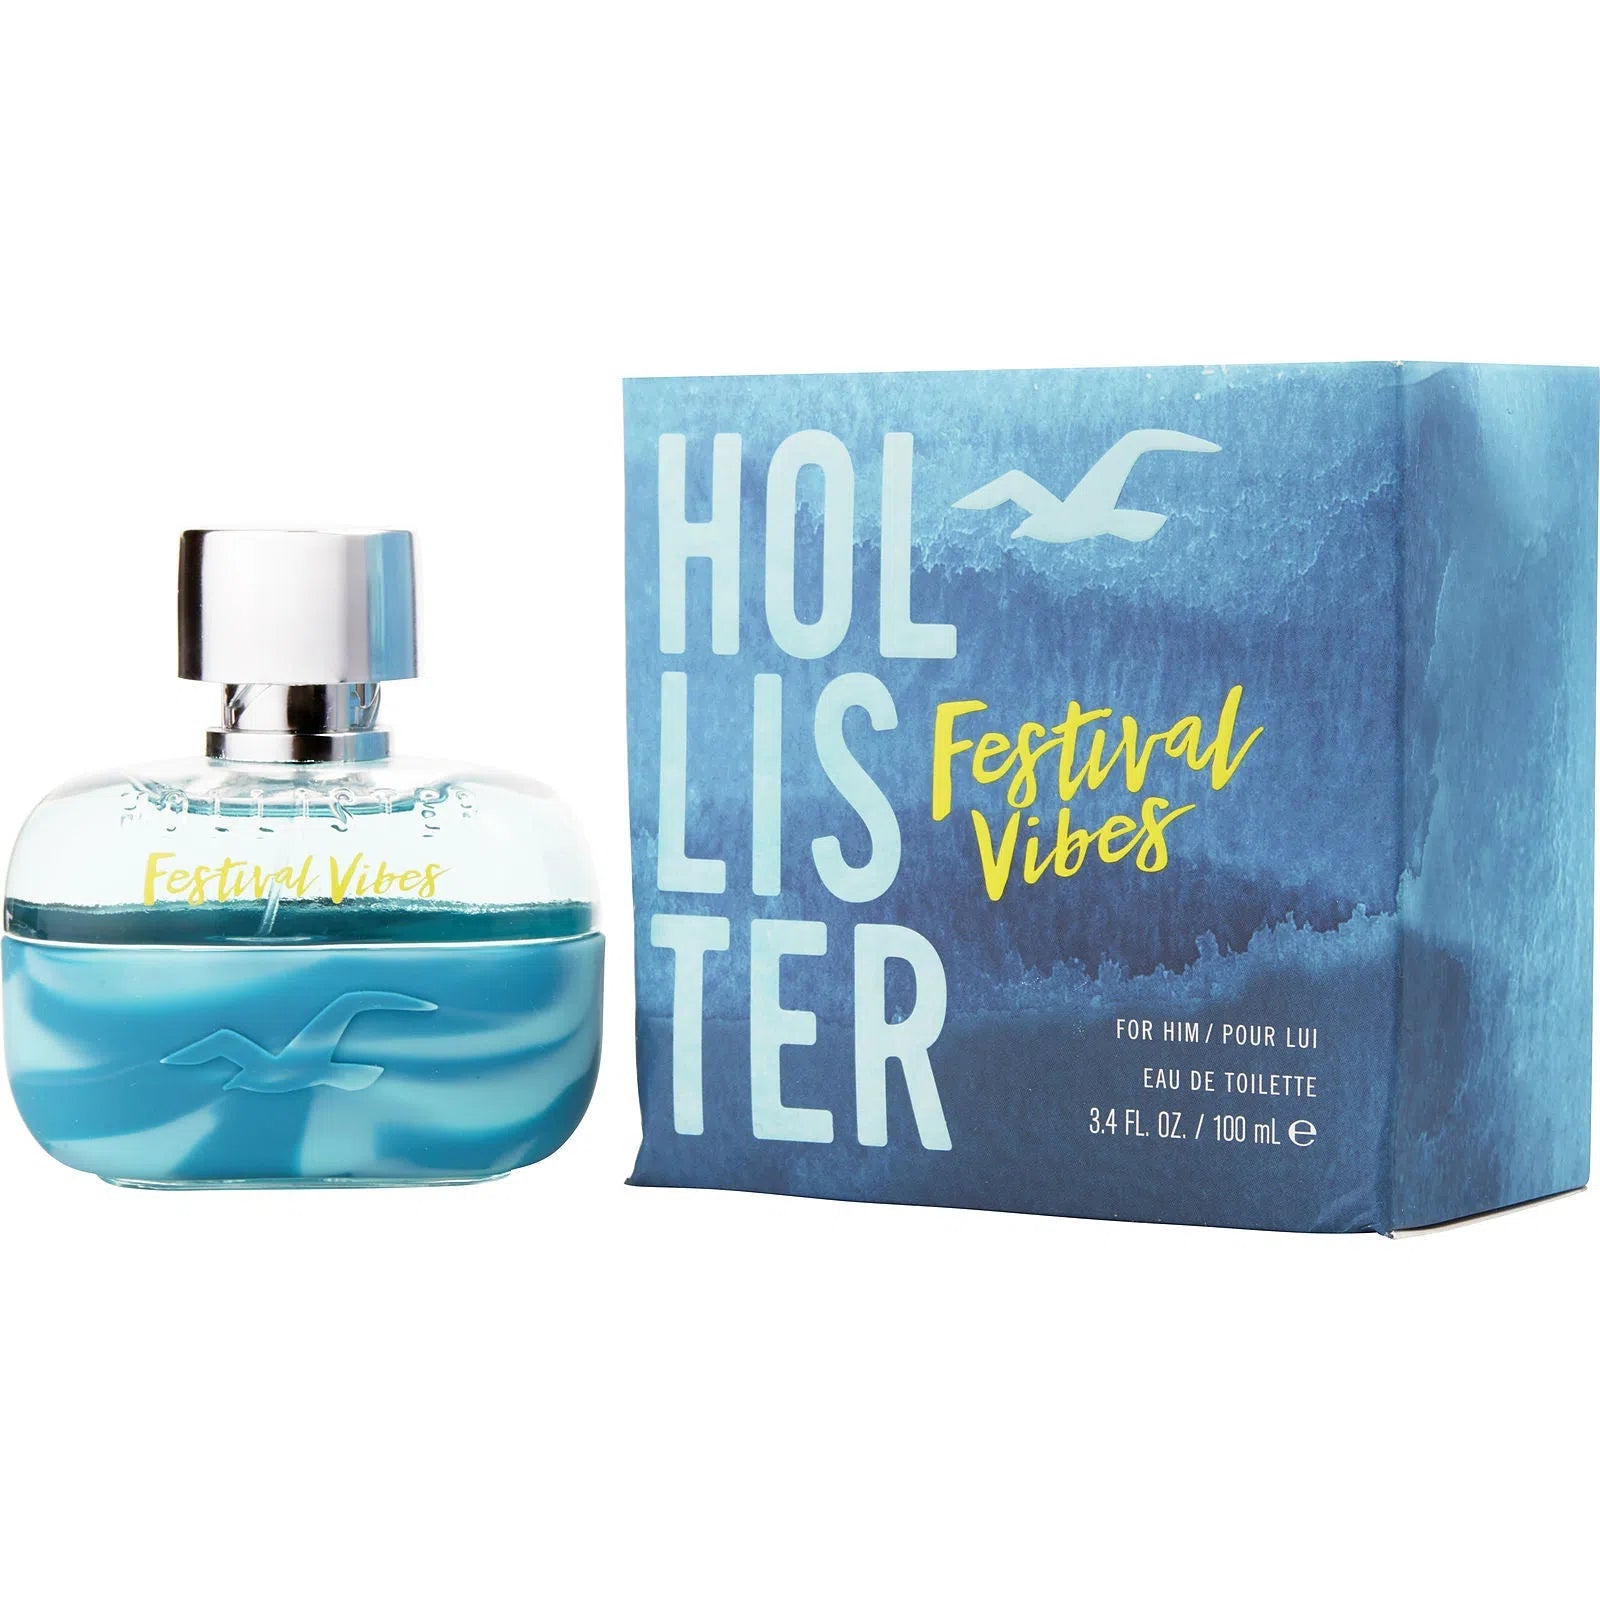 Perfume Hollister Festival Vibes EDT (M) / 100 ml - 085715268518- Prive Perfumes Honduras